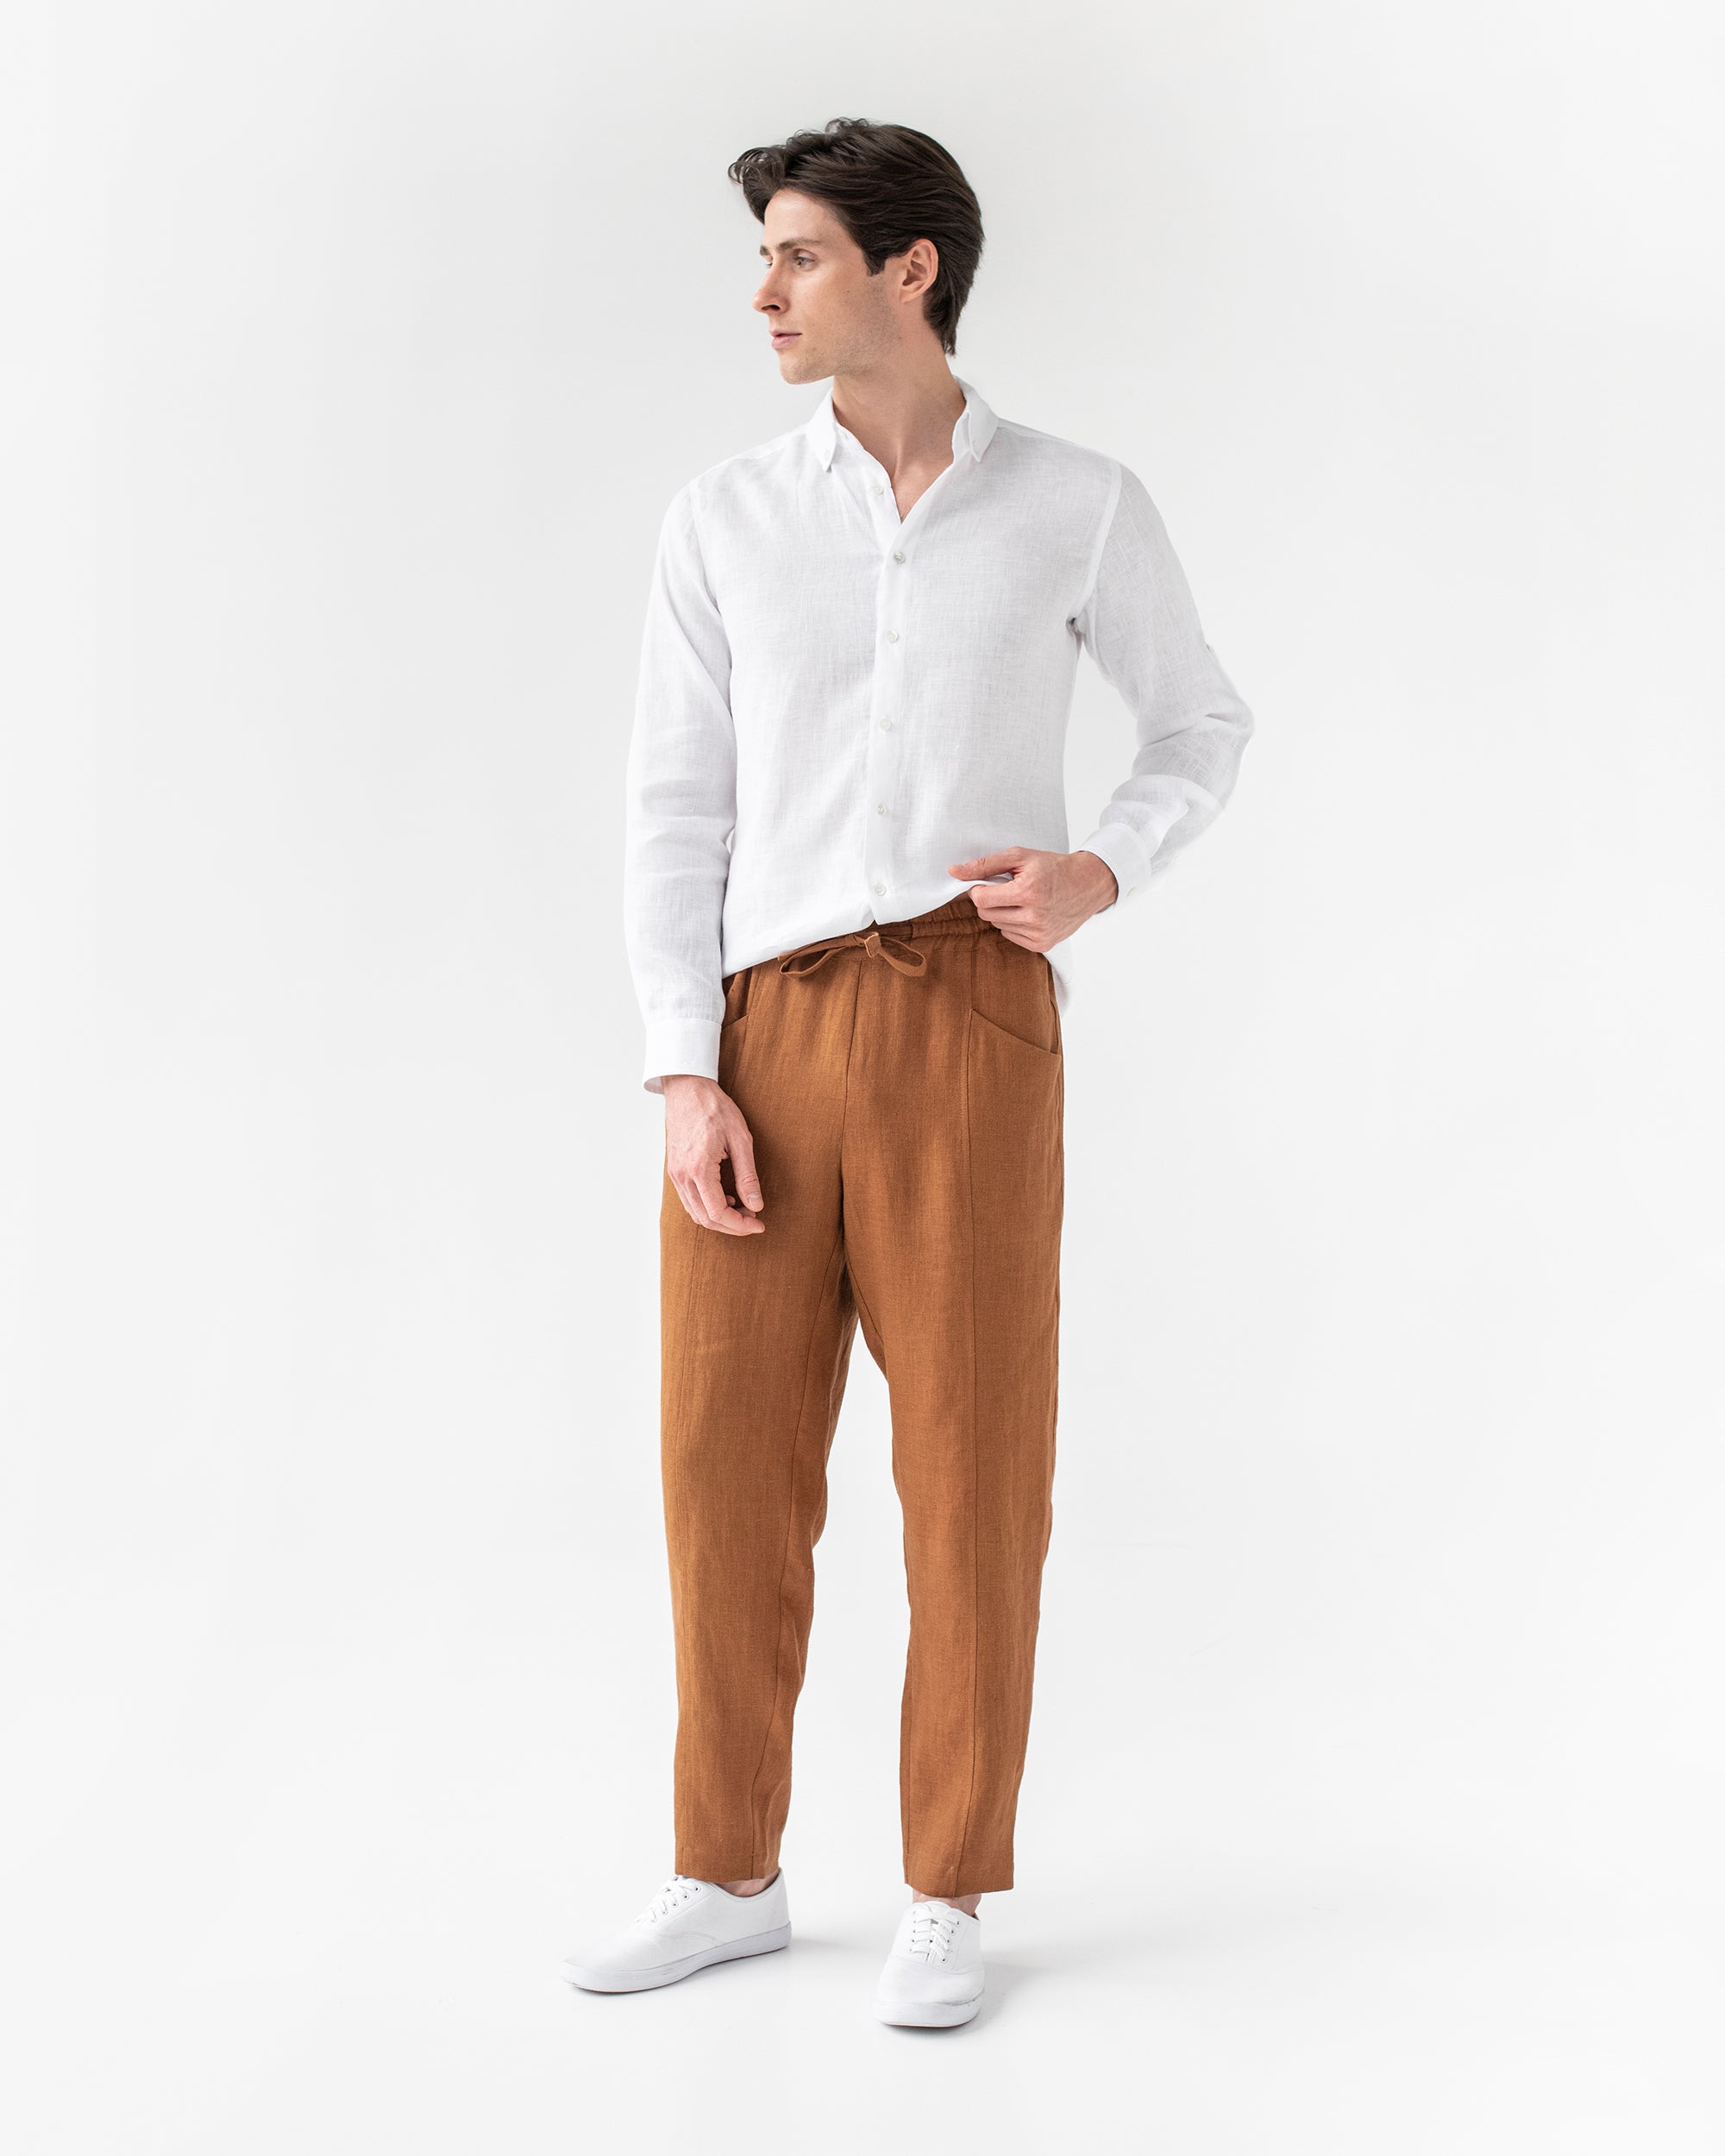 Grand Le Mar | White Linen Oscar Trousers.